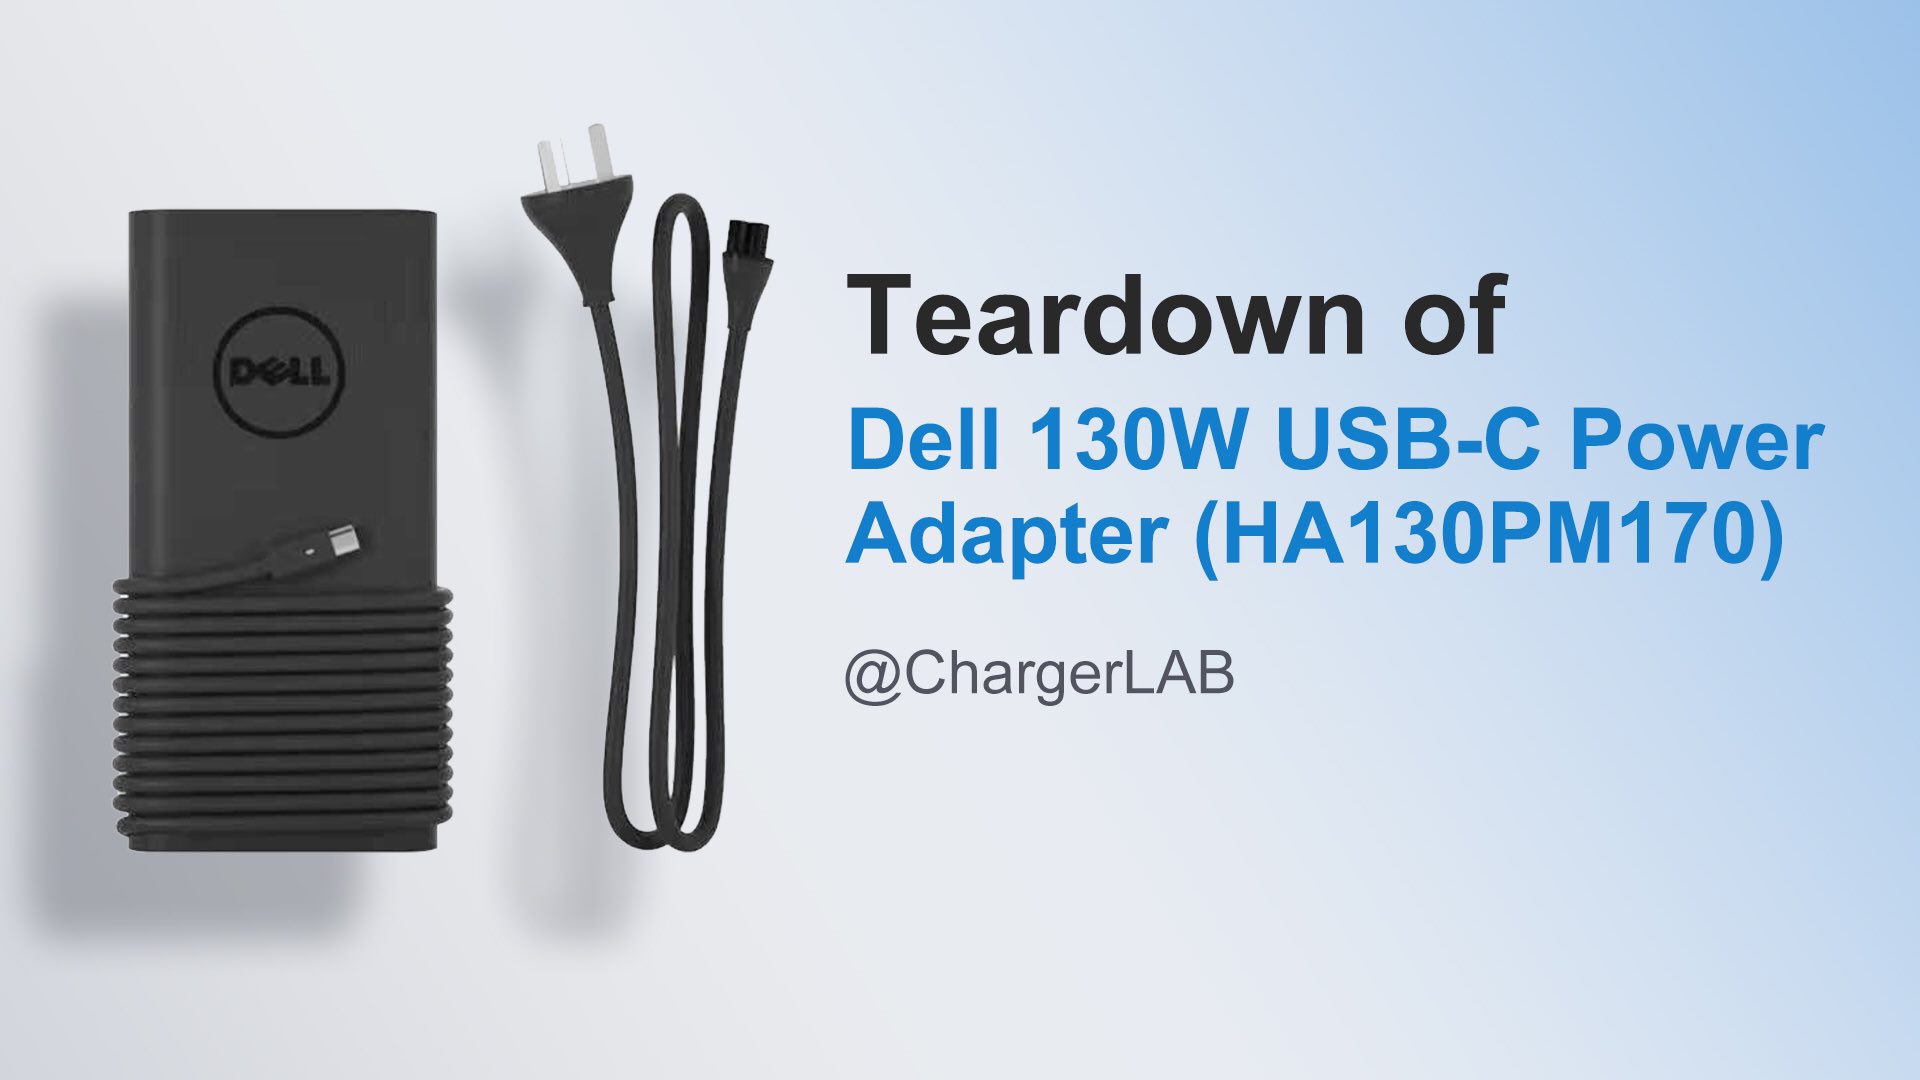 تويتر \ ChargerLAB على تويتر: "Teardown of Dell 130W USB-C Power Adapter  (HA130PM170) | Highest power charger for your Dell laptops @Dell  https://t.co/rO5aaJuPr5 #Dell130w #Dellcharger #Delllaptop #Dellcomputer  https://t.co/2IrYQmrPxf"